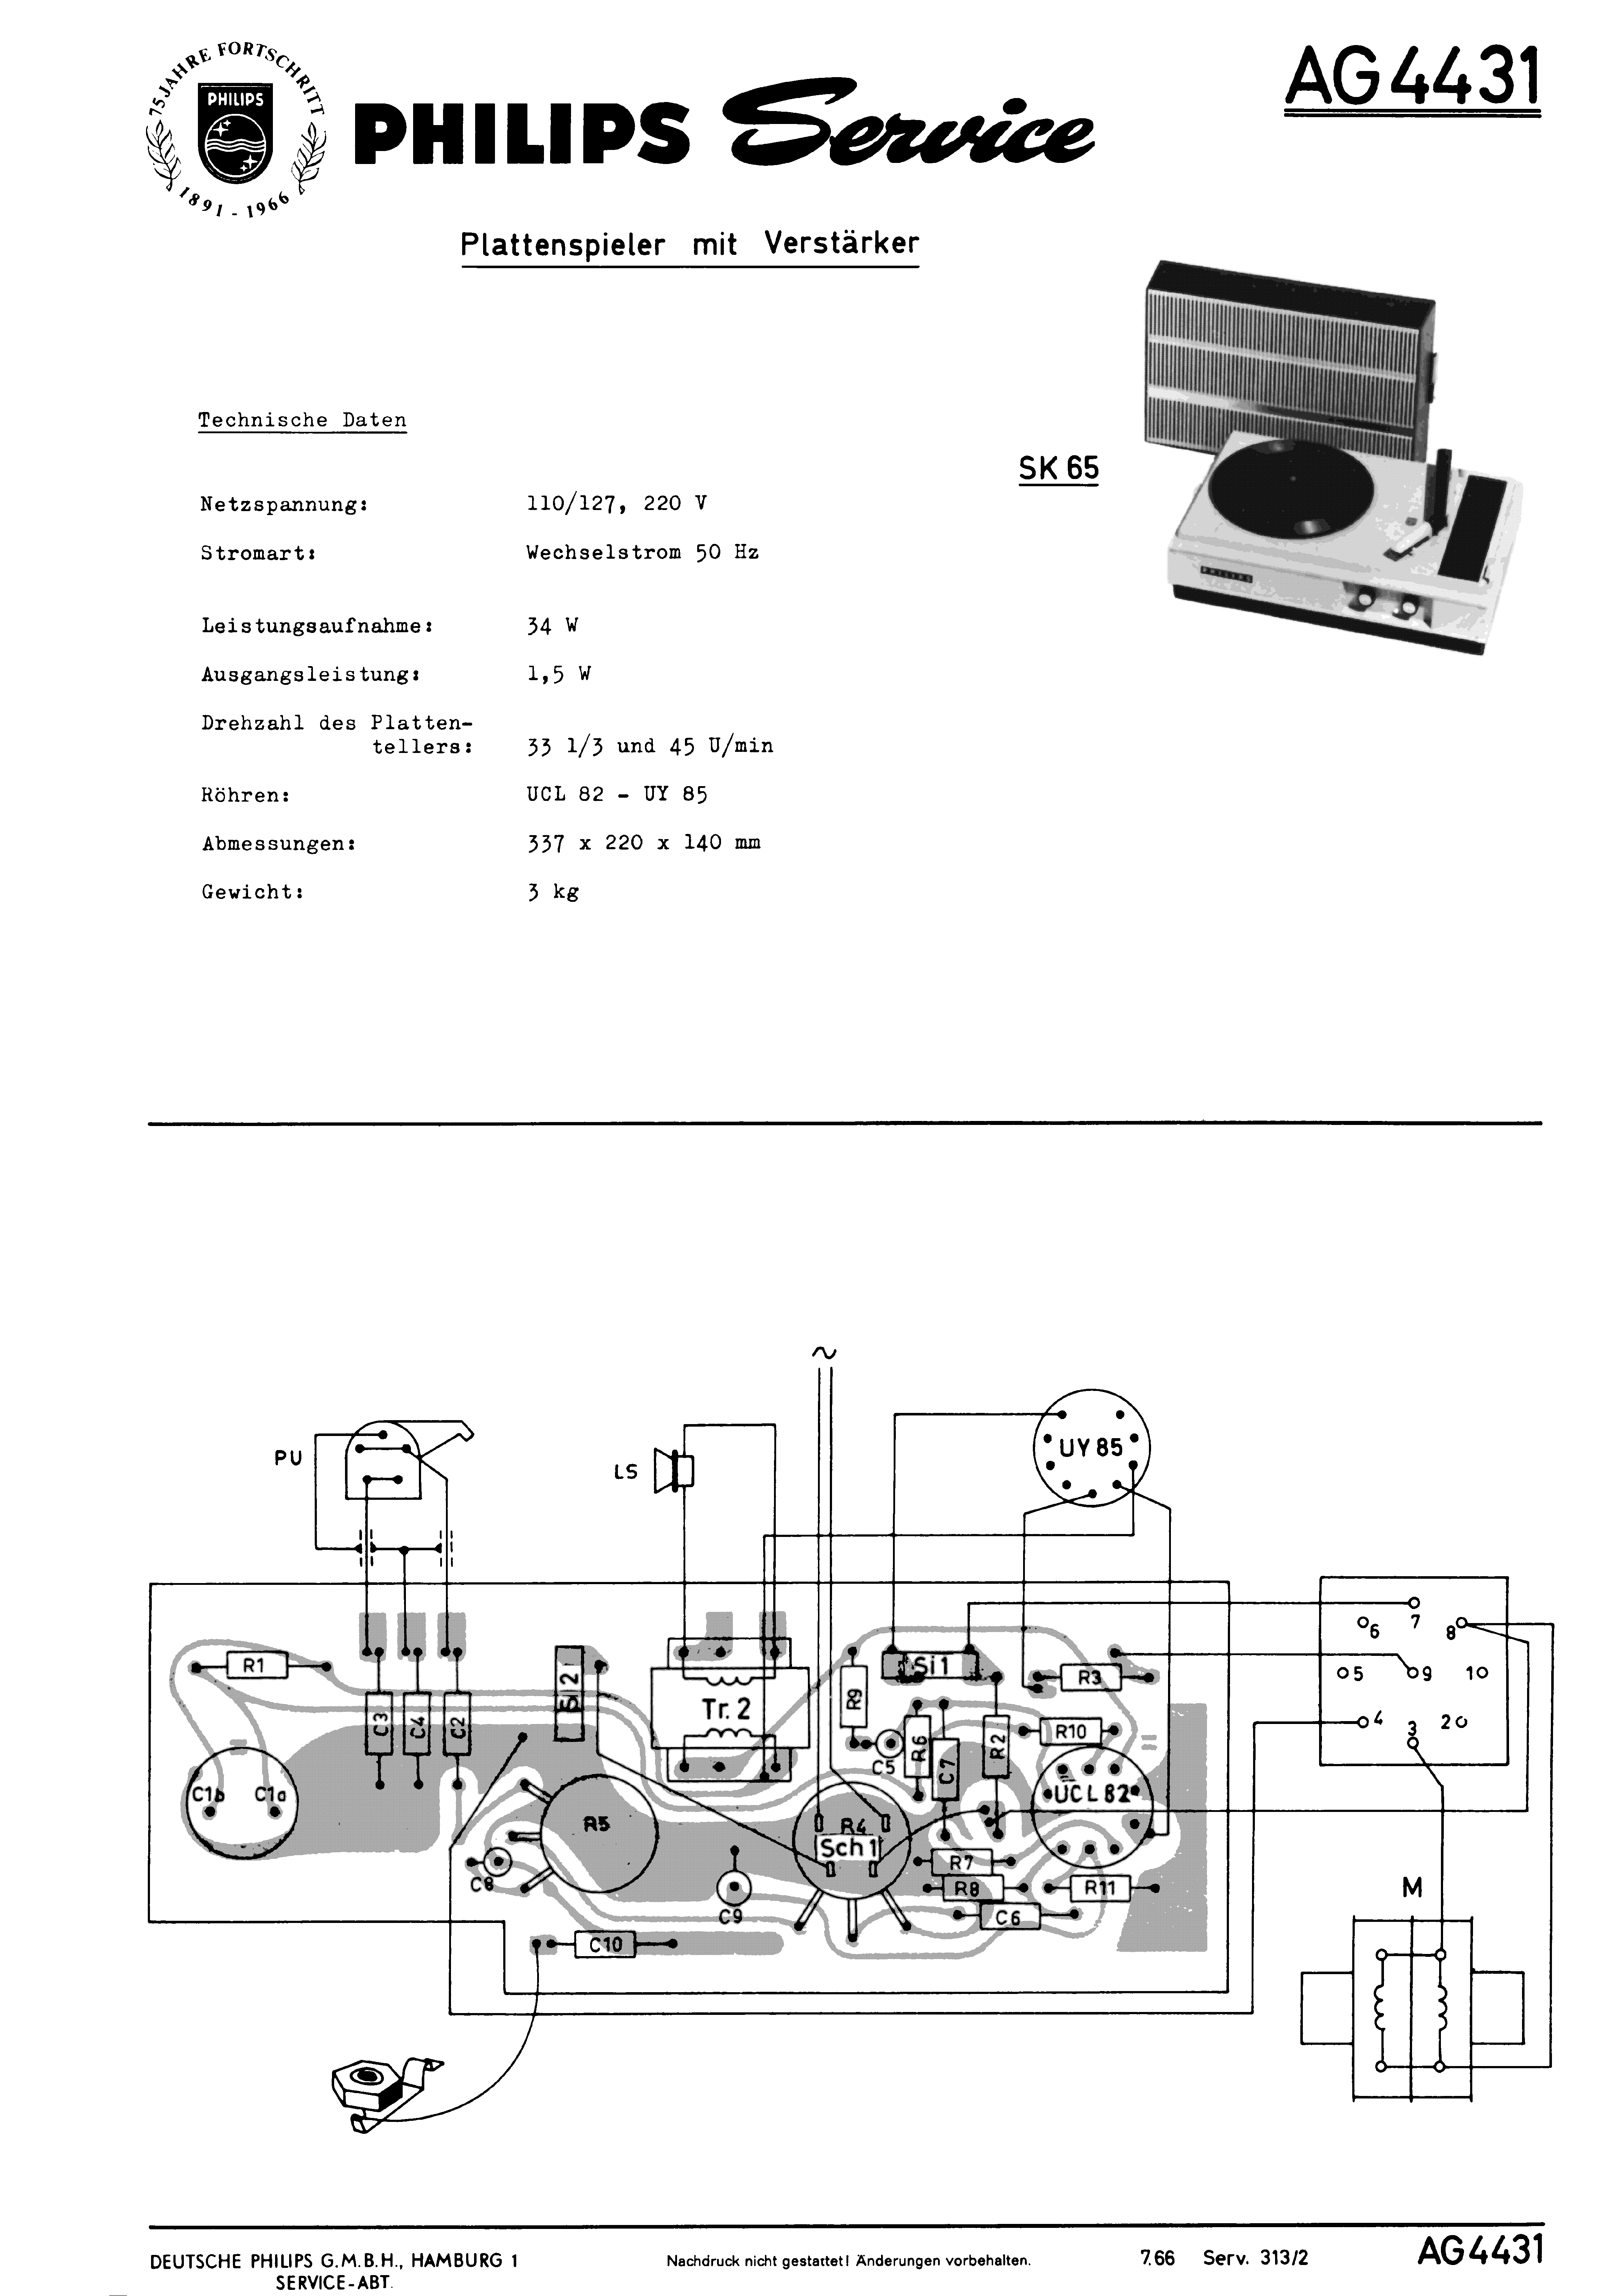 PHILIPS AG4431 PLATTENSPIELER MIT VERSTAERKER SM service manual (1st page)